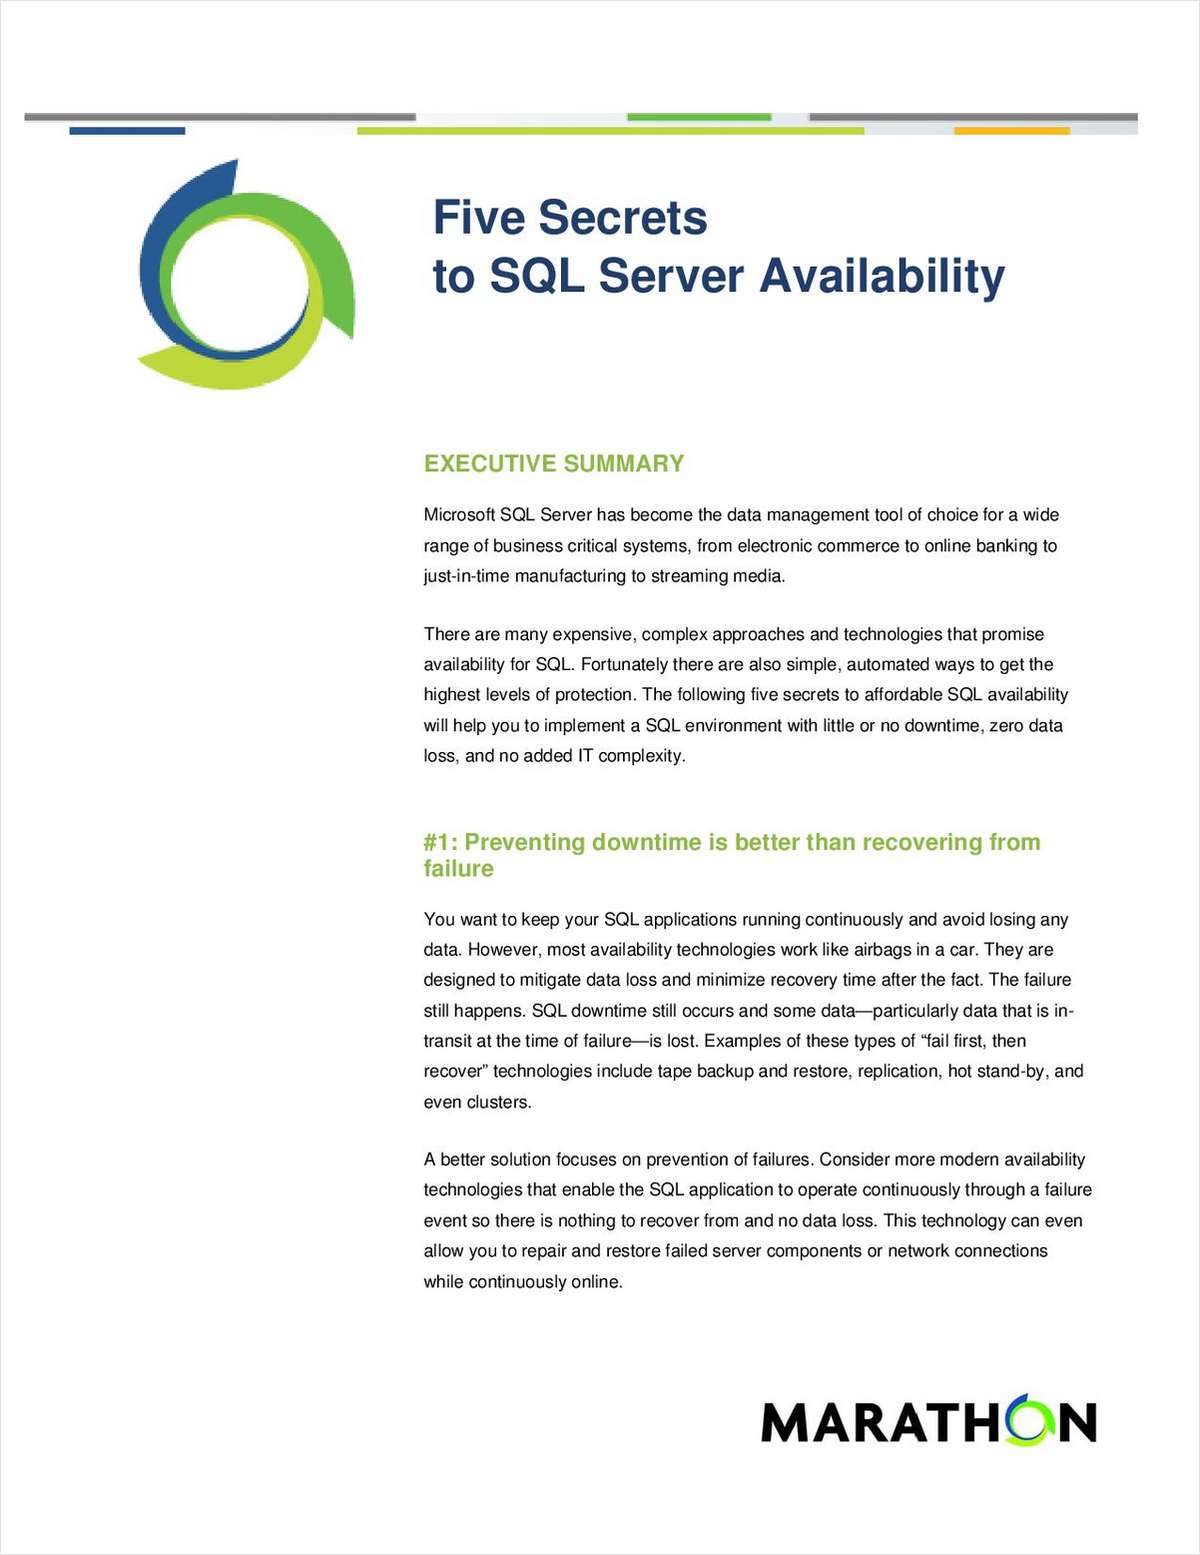 Five Secrets to SQL Server Availability